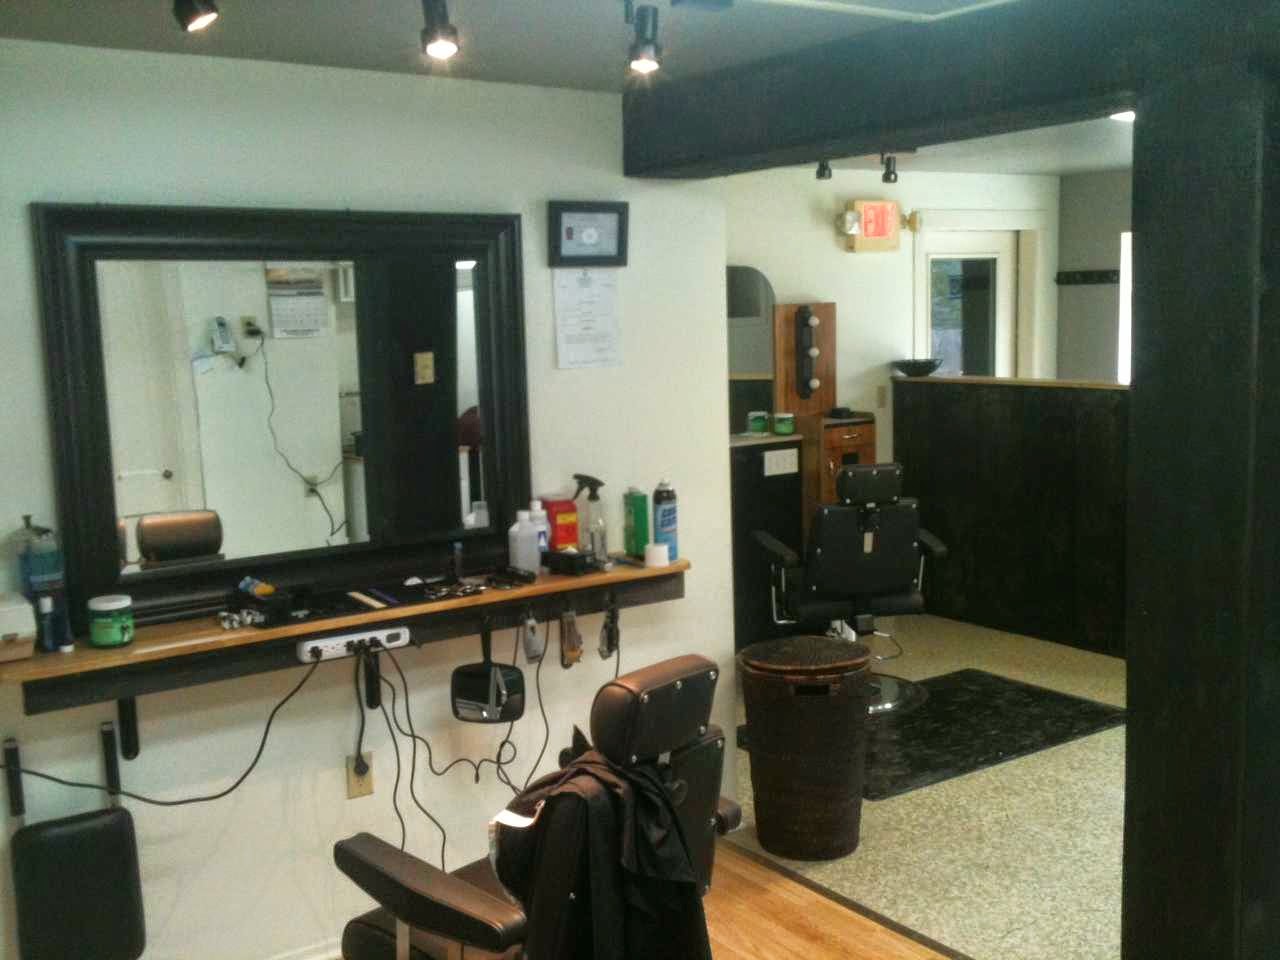 The Hamilton Barber Shop 58 Utica St, Hamilton New York 13346